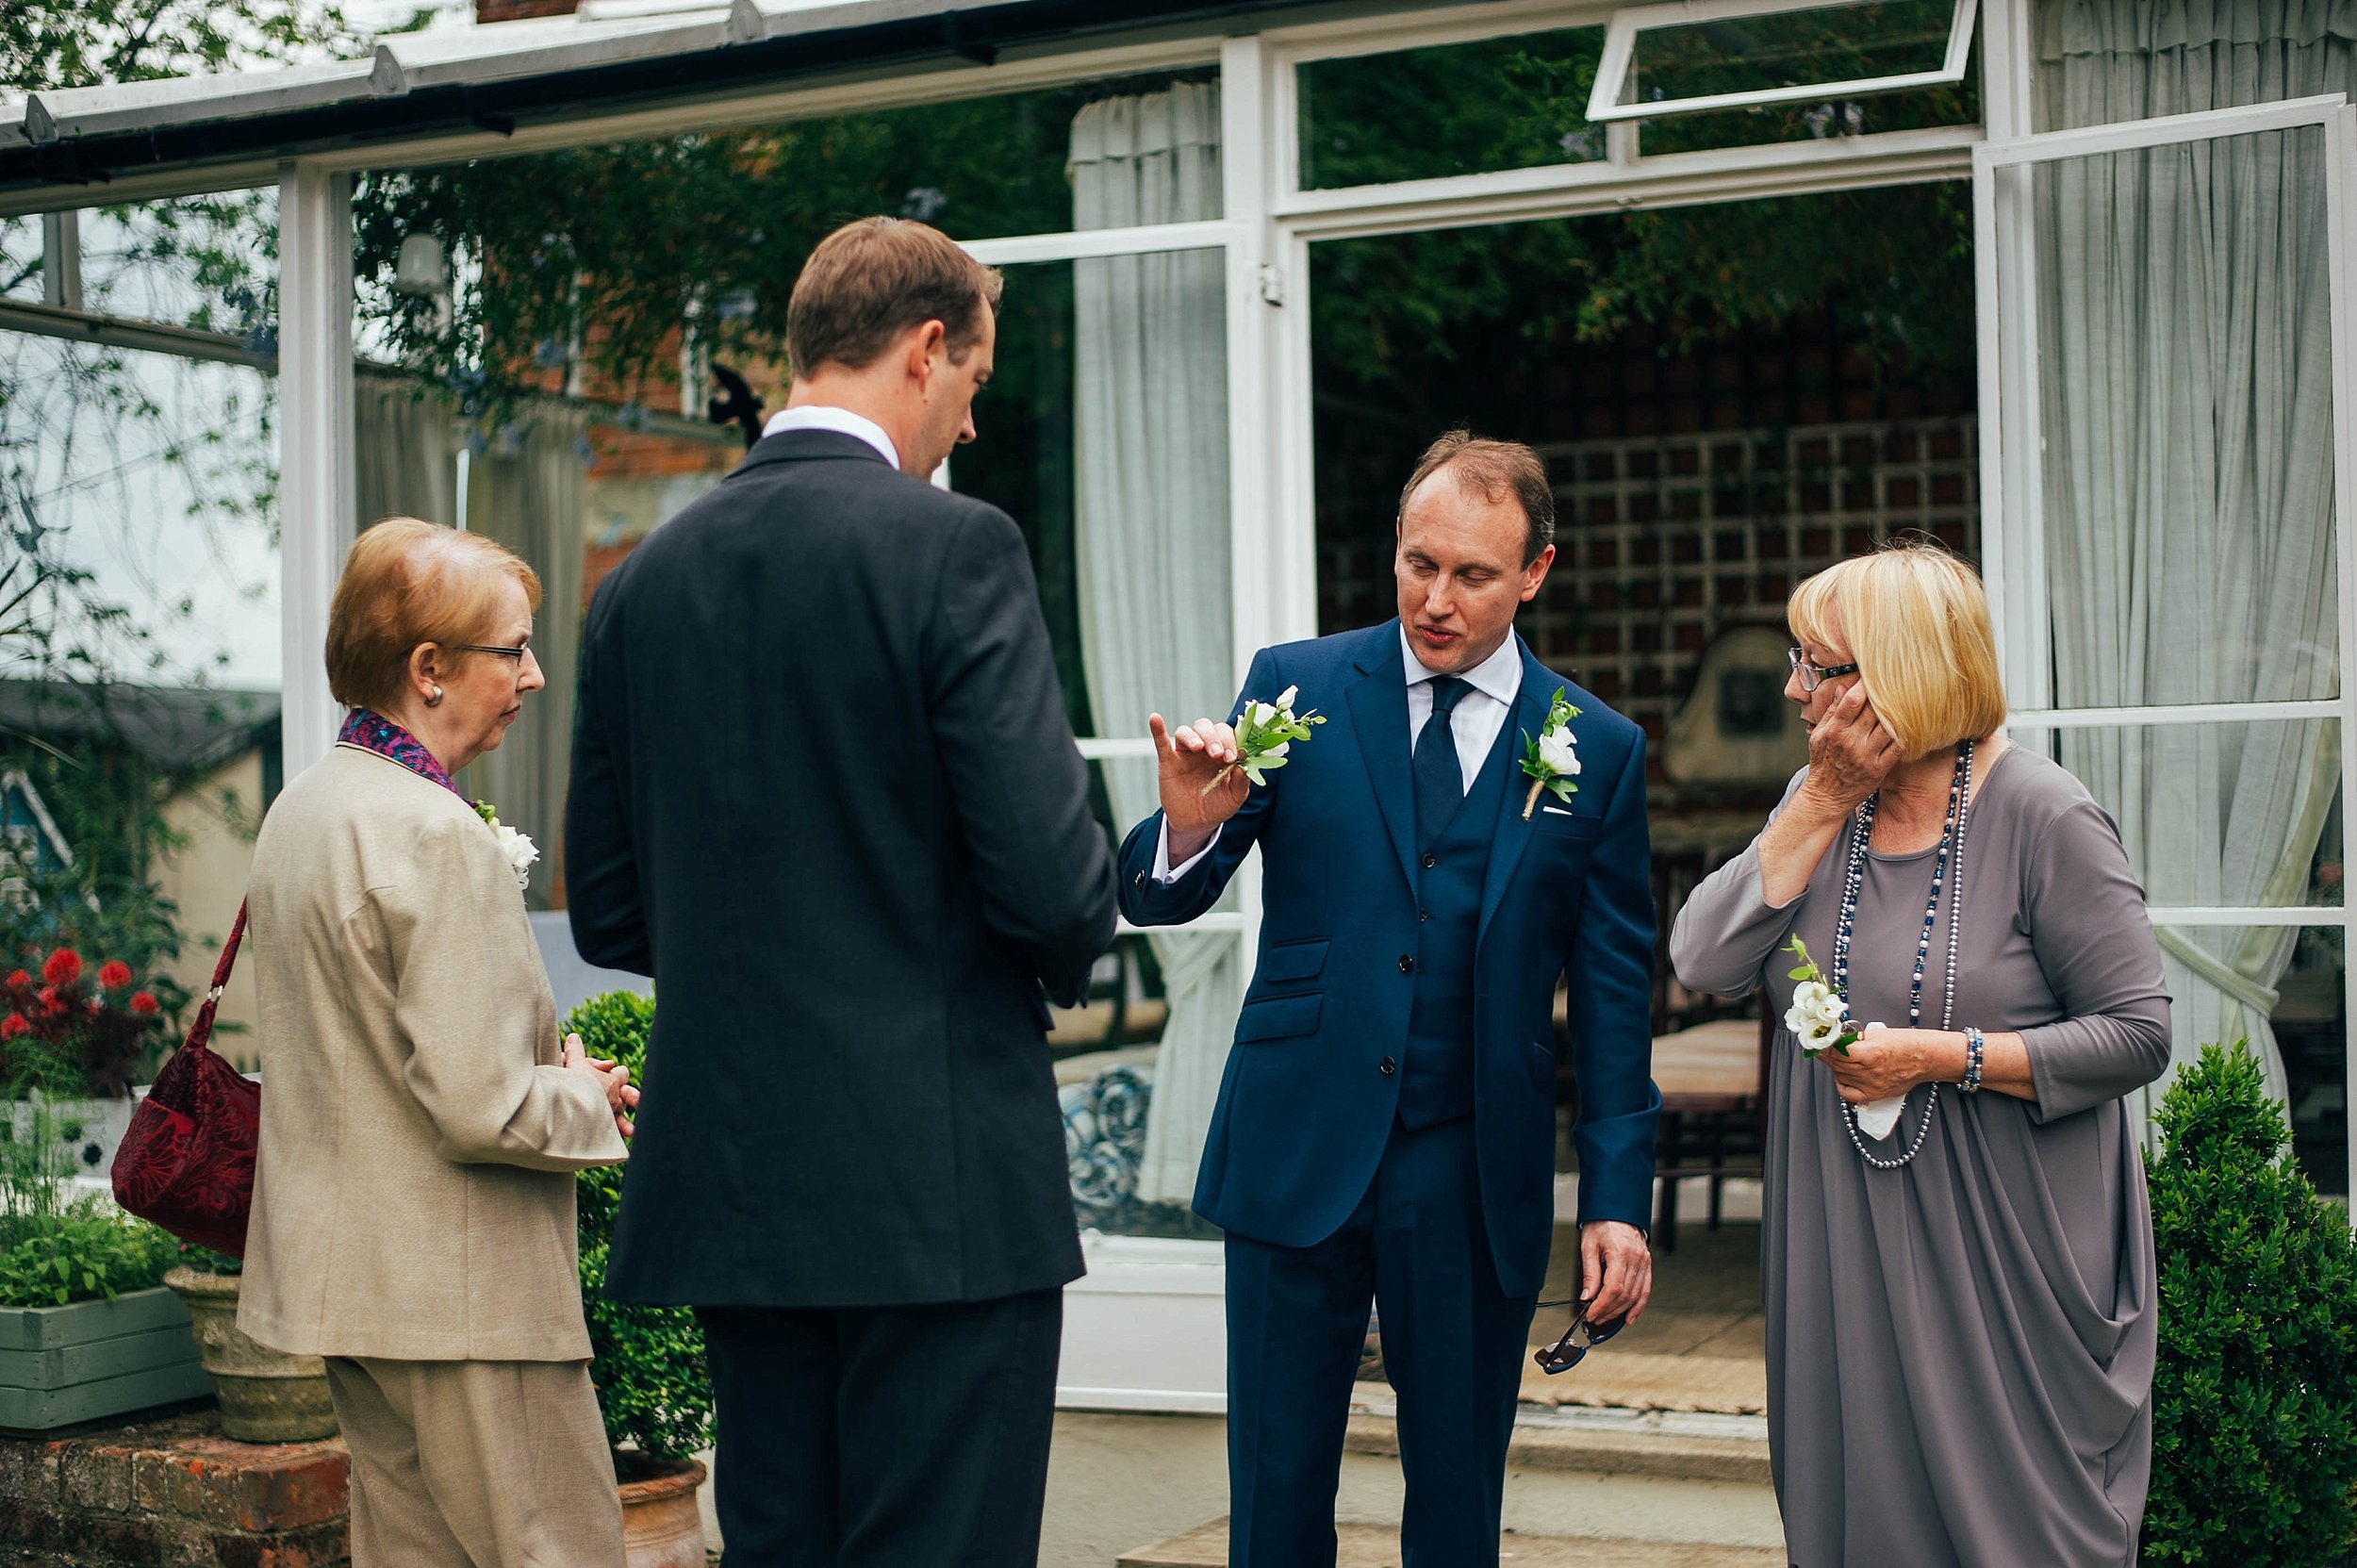 Rustic Secret Garden Inspired Baddow Park Wedding Essex UK Documentary Wedding Photographer